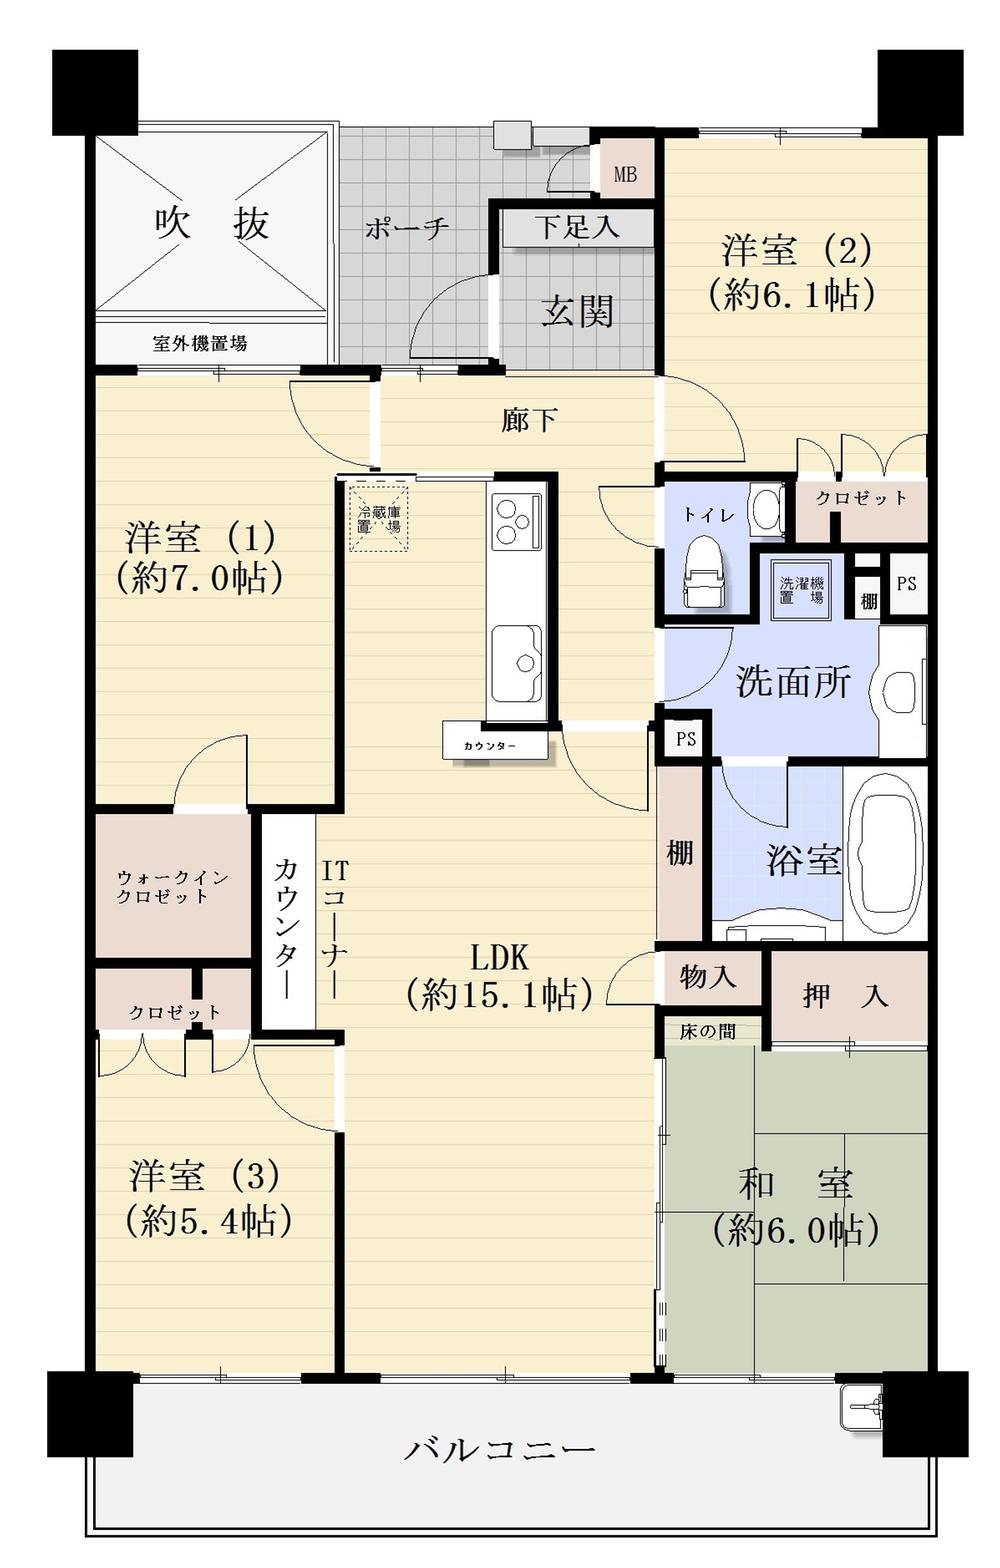 Floor plan. 4LDK, Price 27.5 million yen, Occupied area 90.81 sq m , Balcony area 16.2 sq m